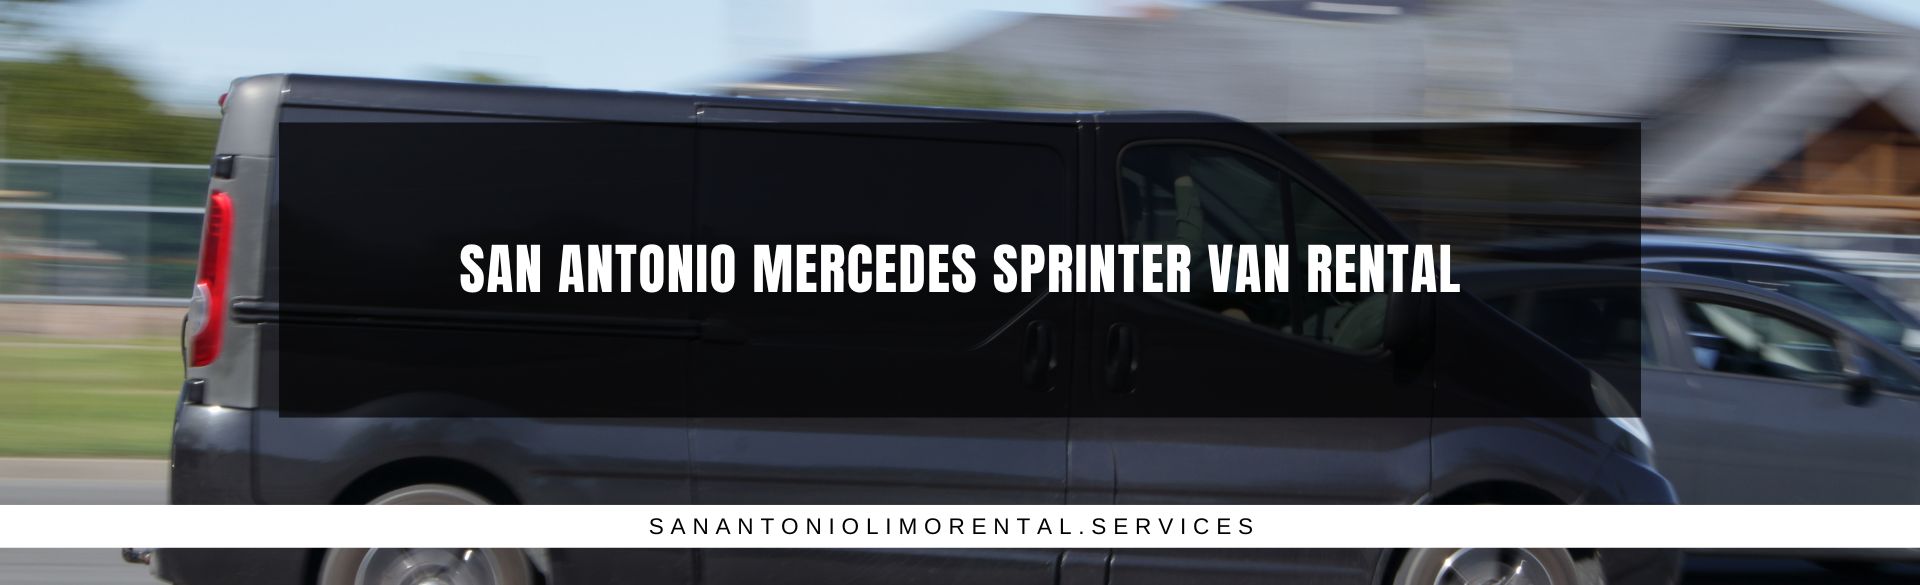 San Antonio Mercedes Sprinter Van Rental